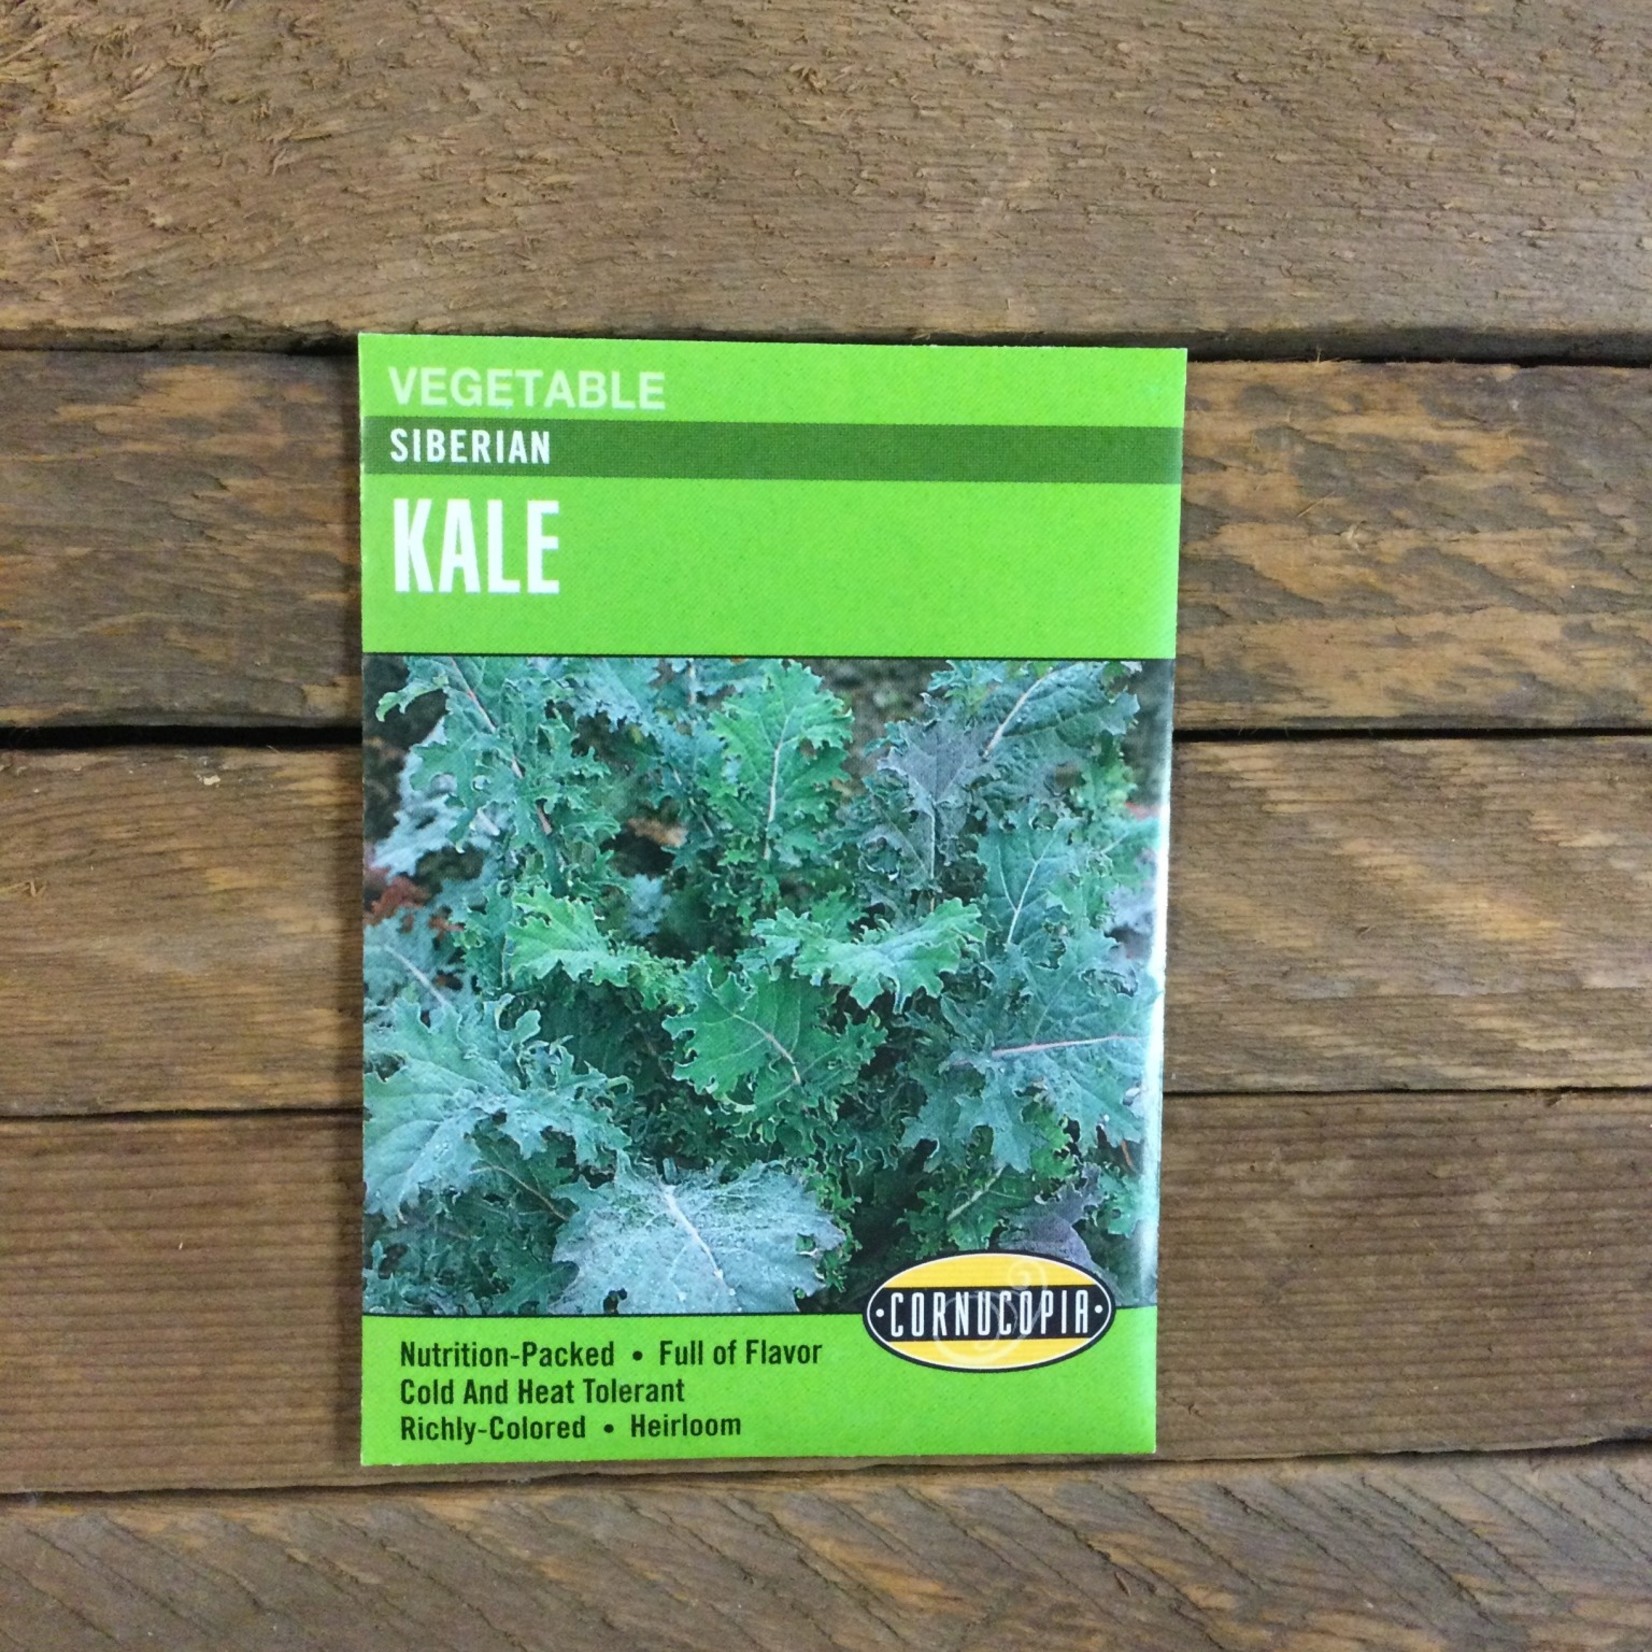 Cornucopia Kale - Kale Siberian